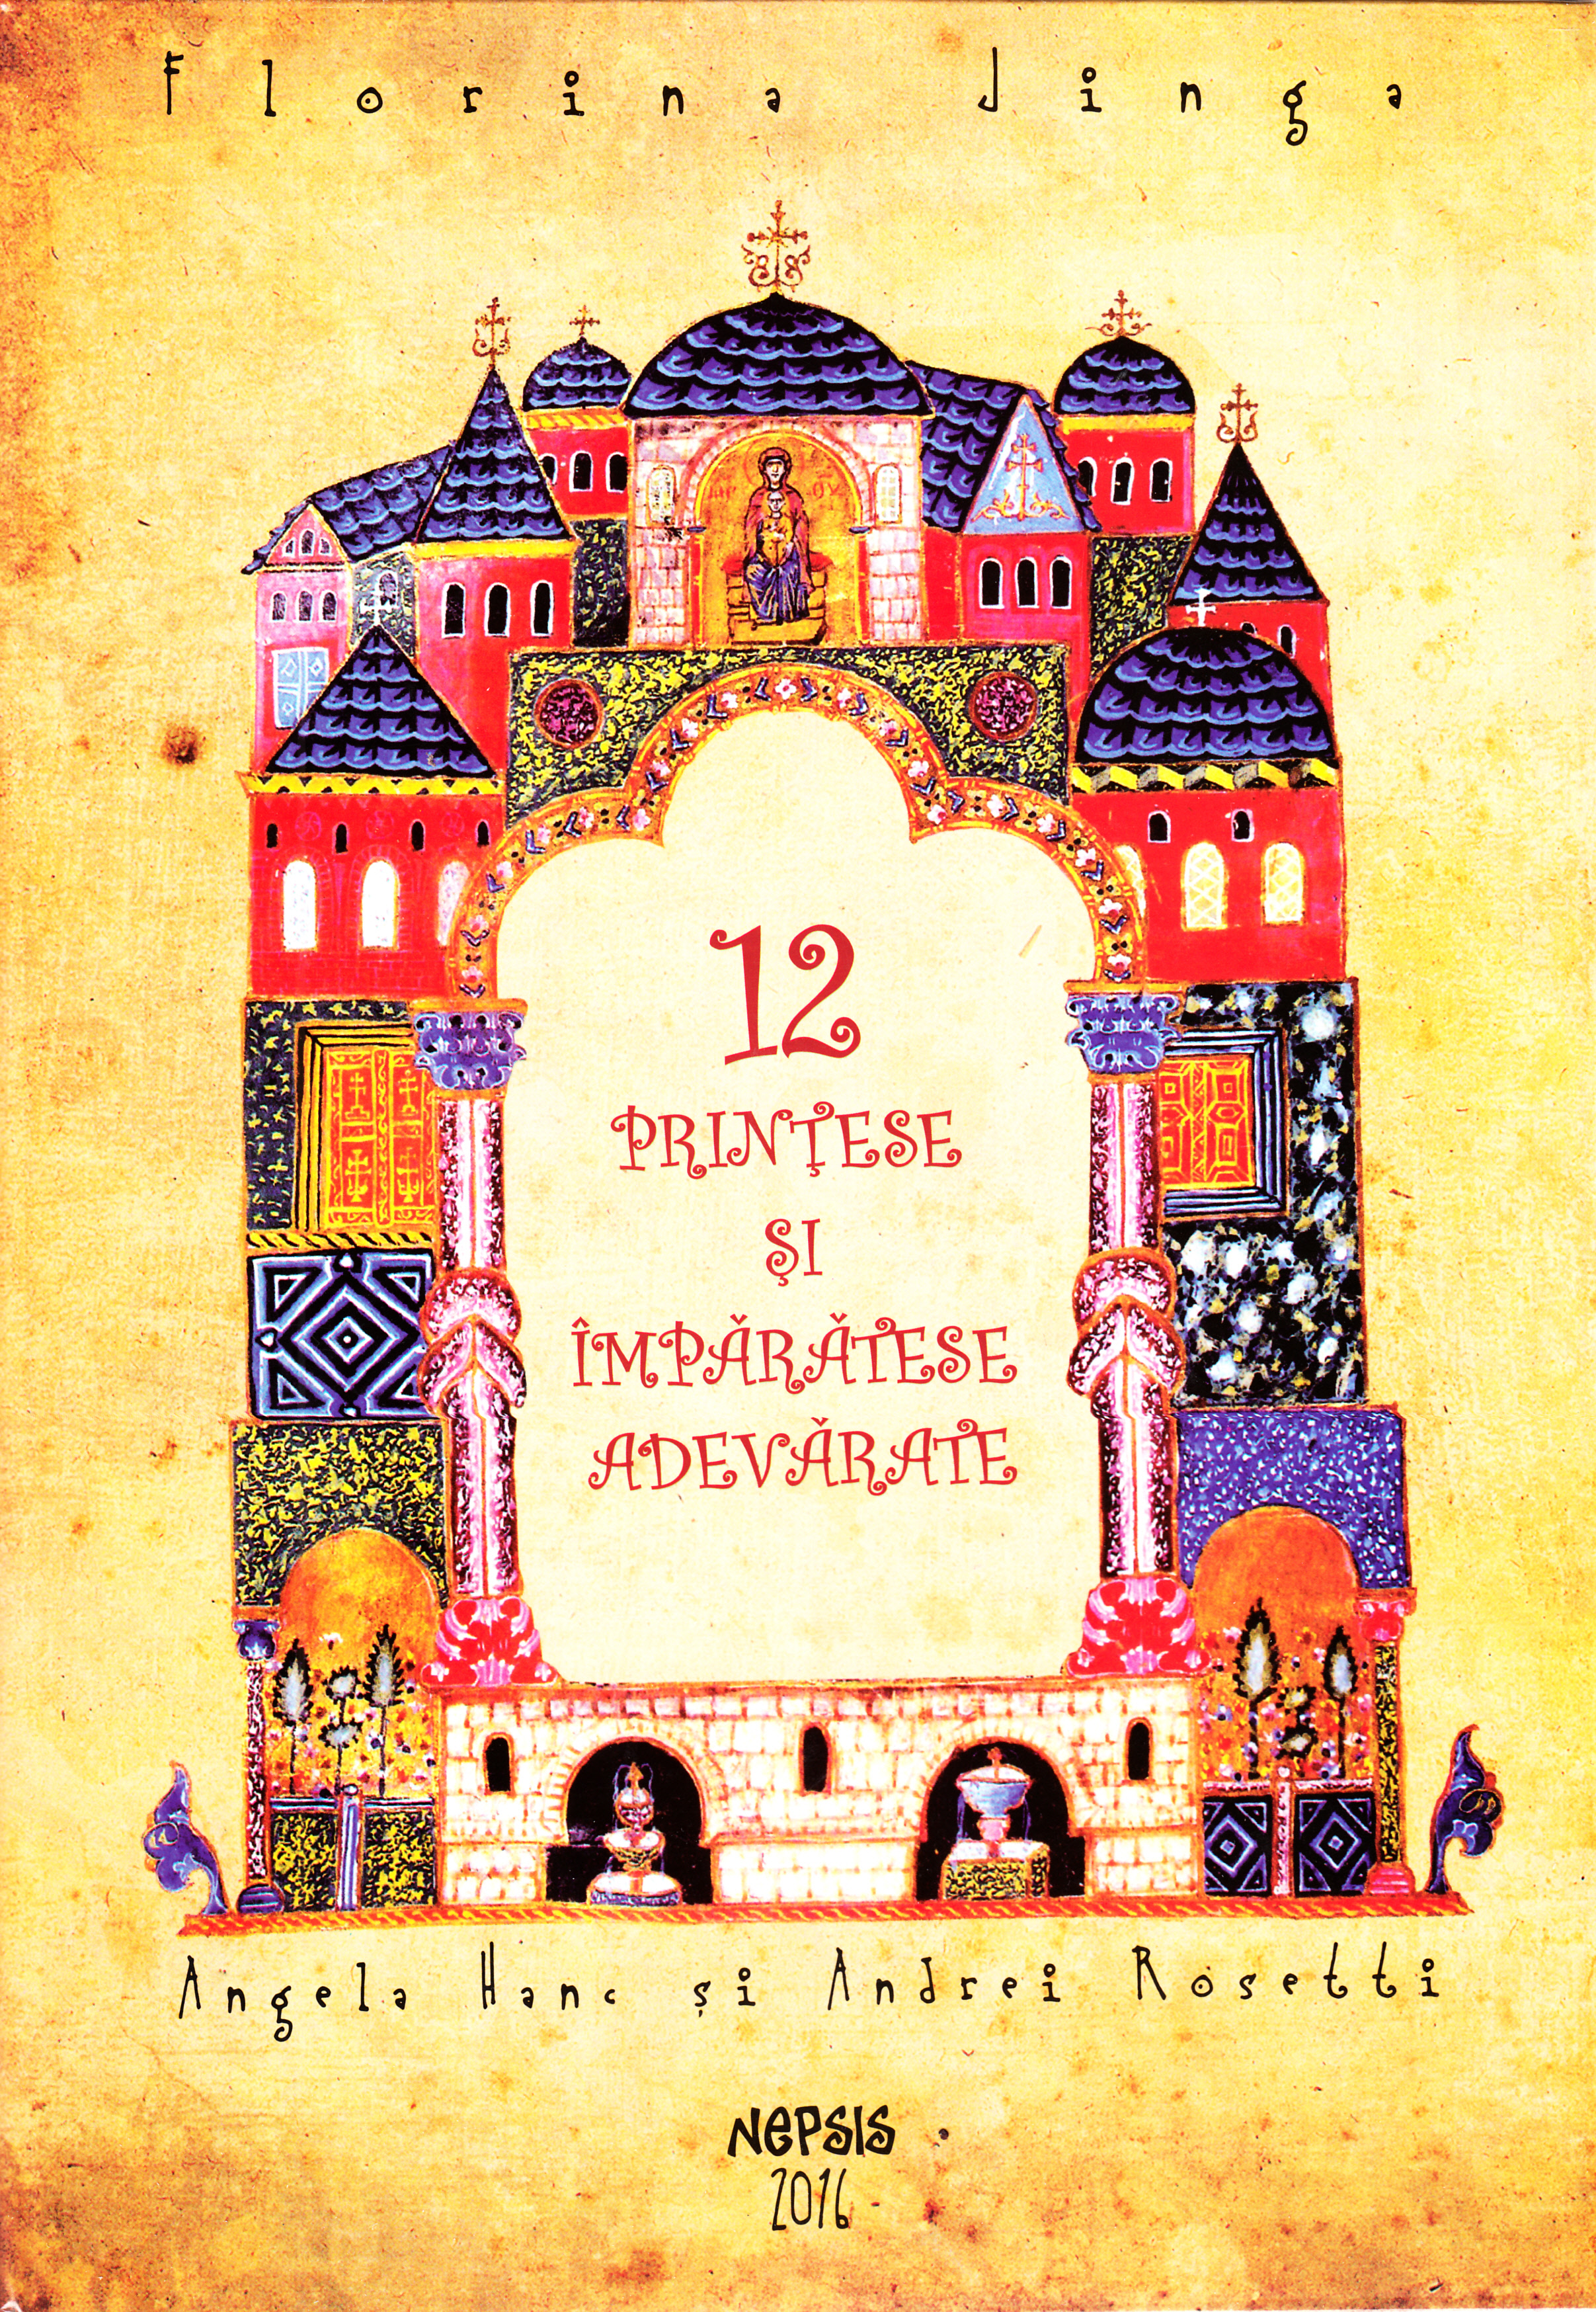 12 printese si imparatese adevarate + CD - Florina Jinga, Angela Hanc, Andrei Rosetti